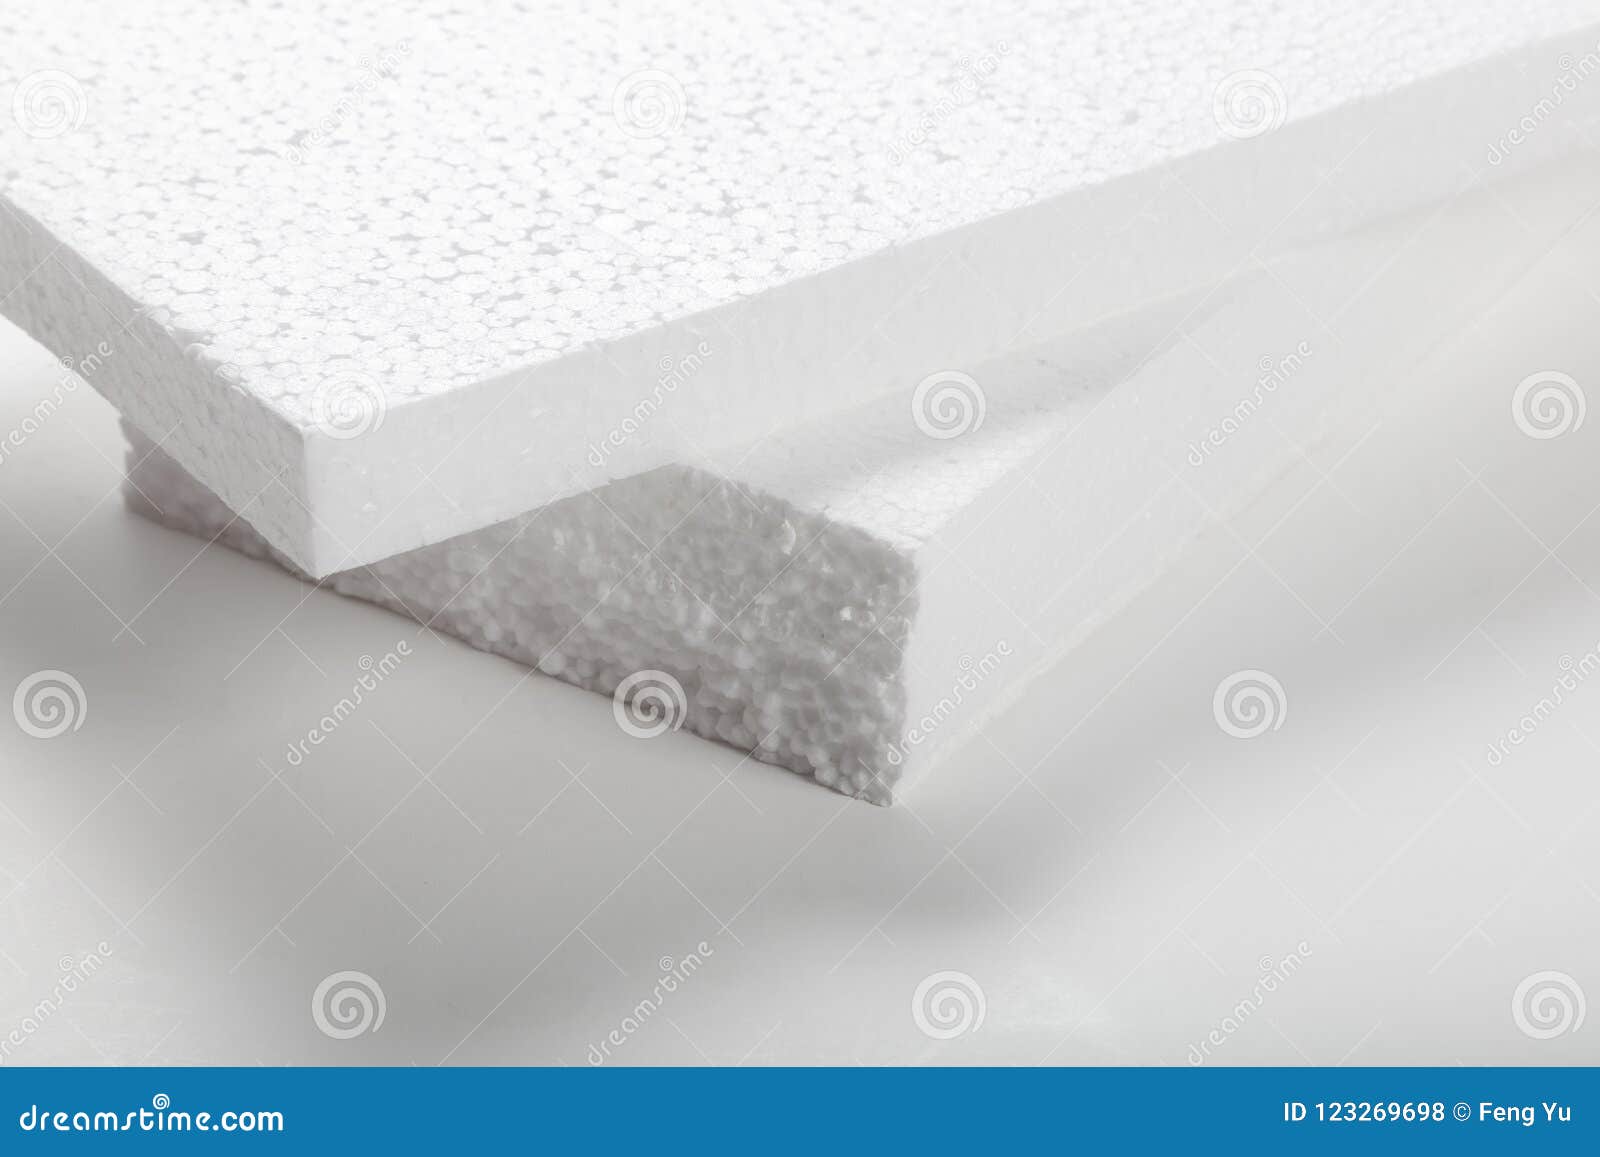 White foam board stock photo. Image of material, insulation - 123269698